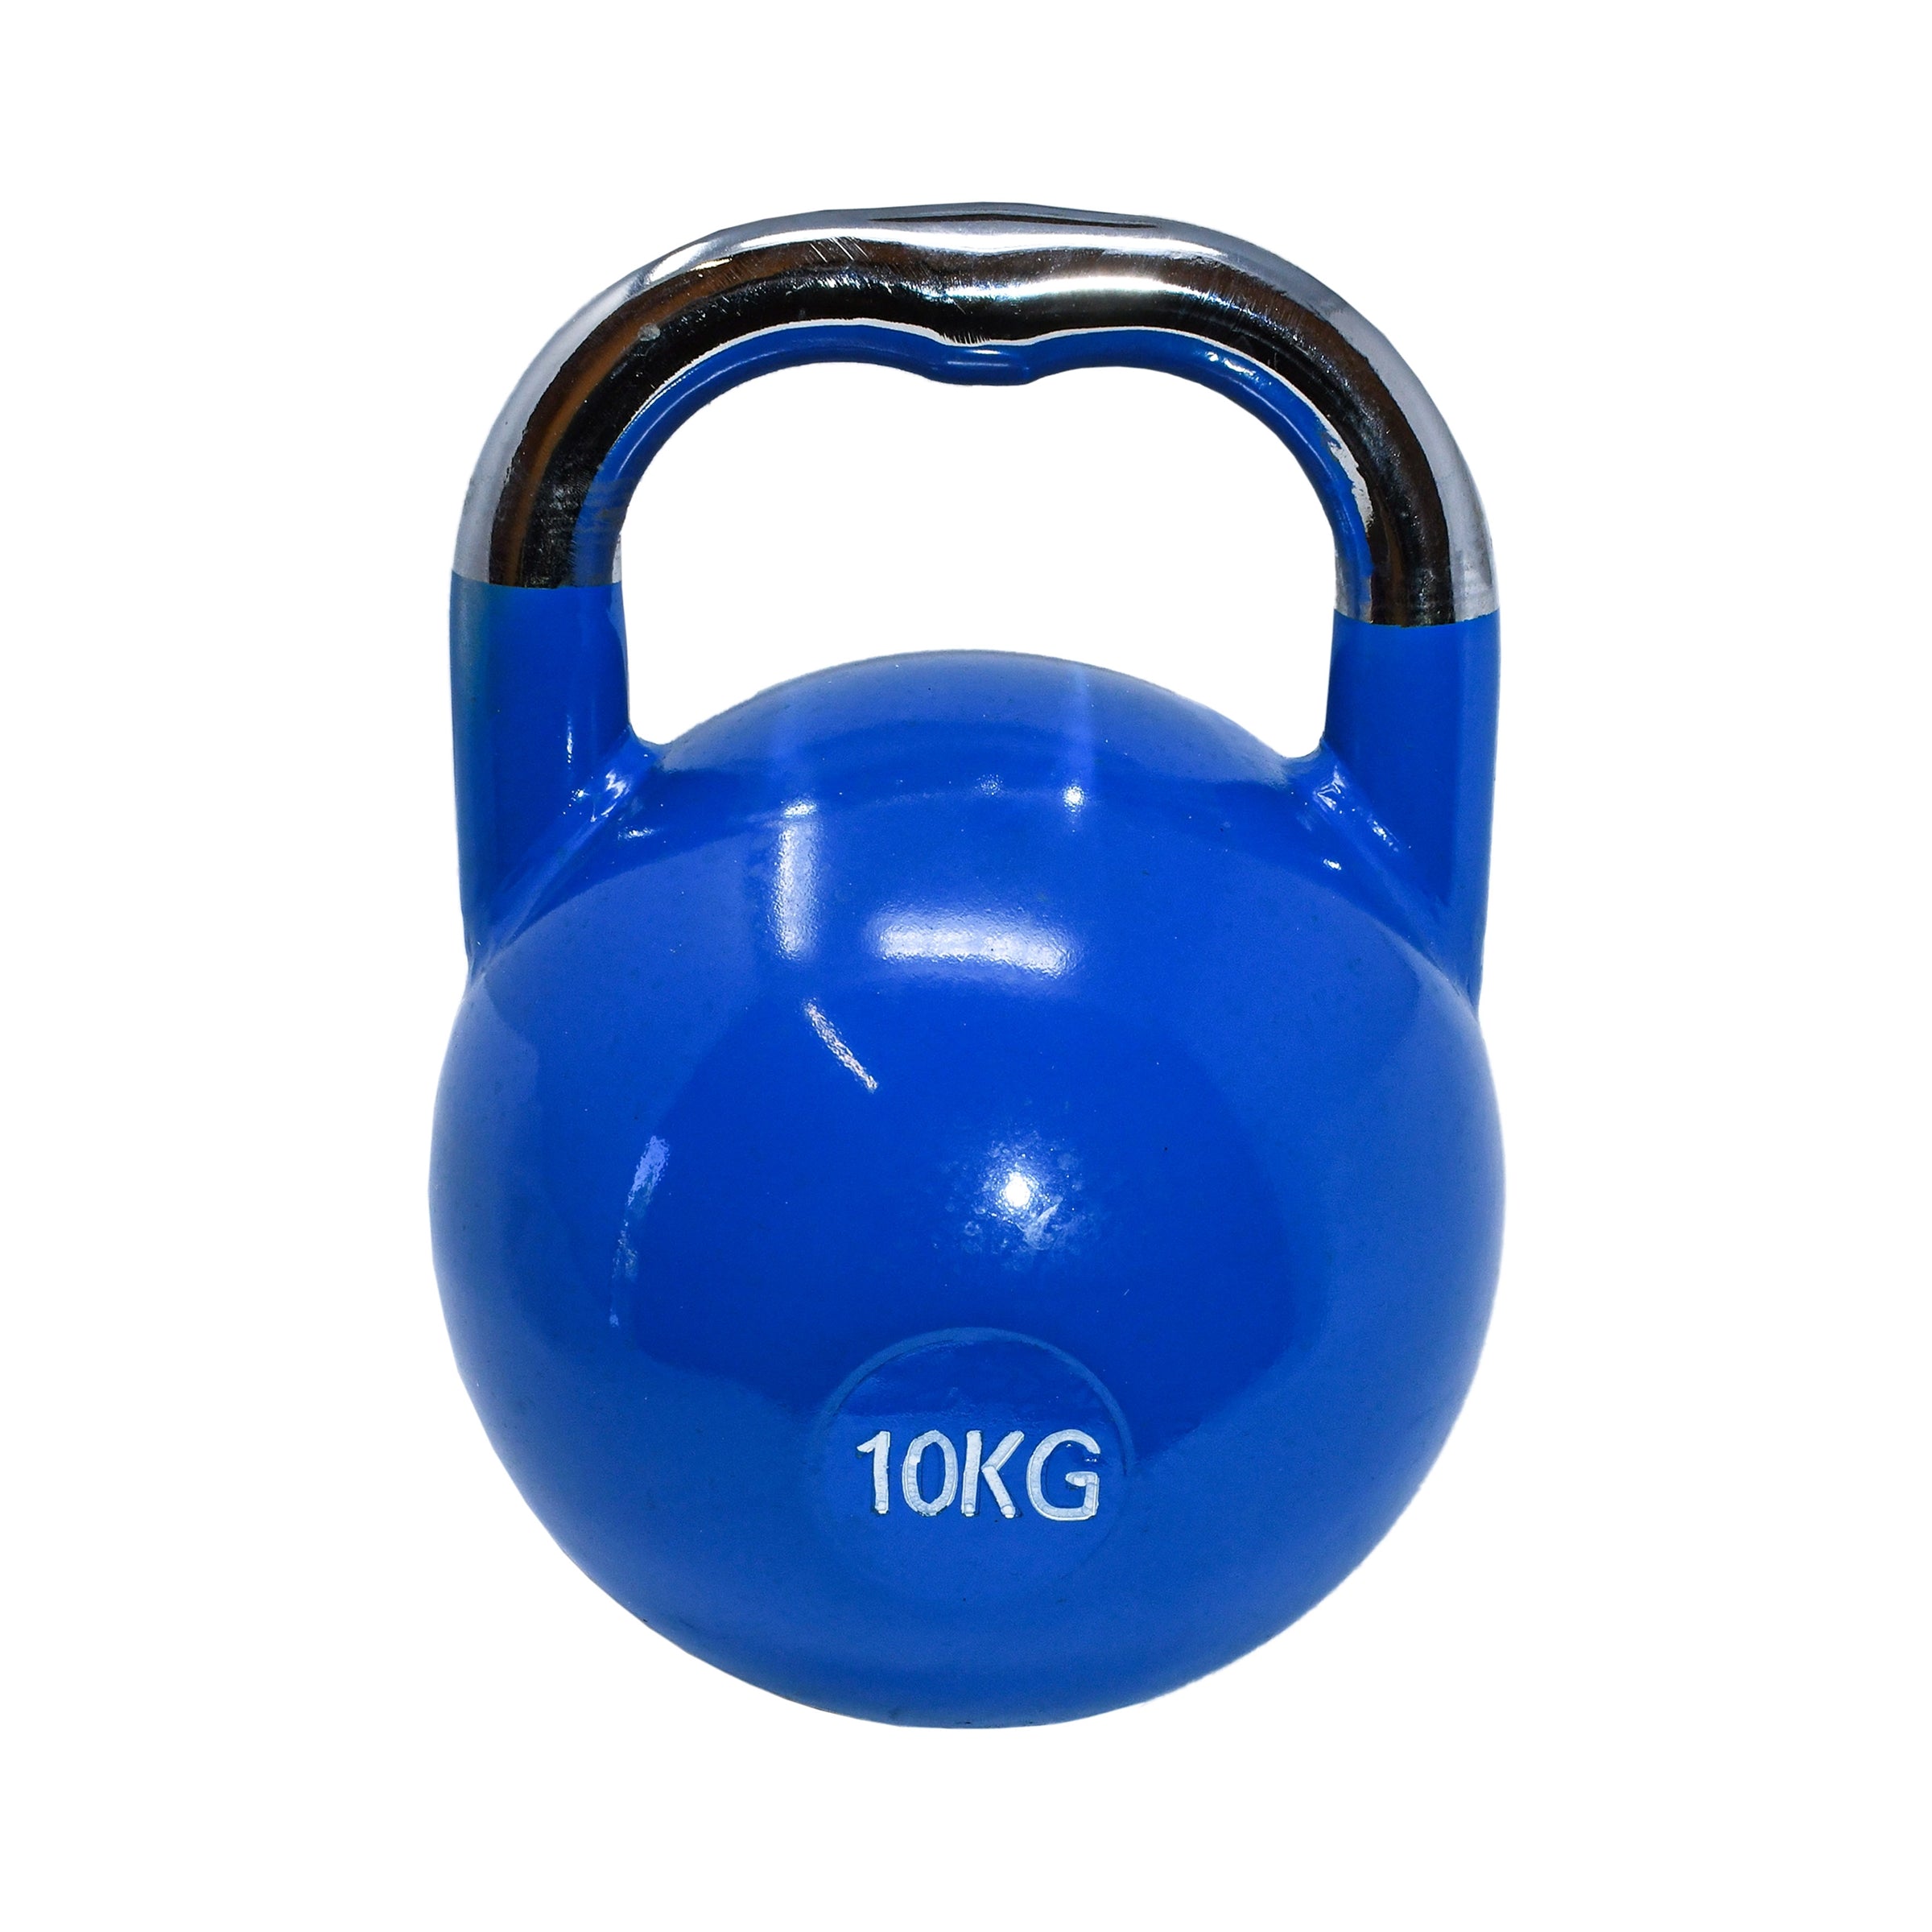 Premium Coated Steel Kettlebell - 22 lbs (10 kg) - Blue